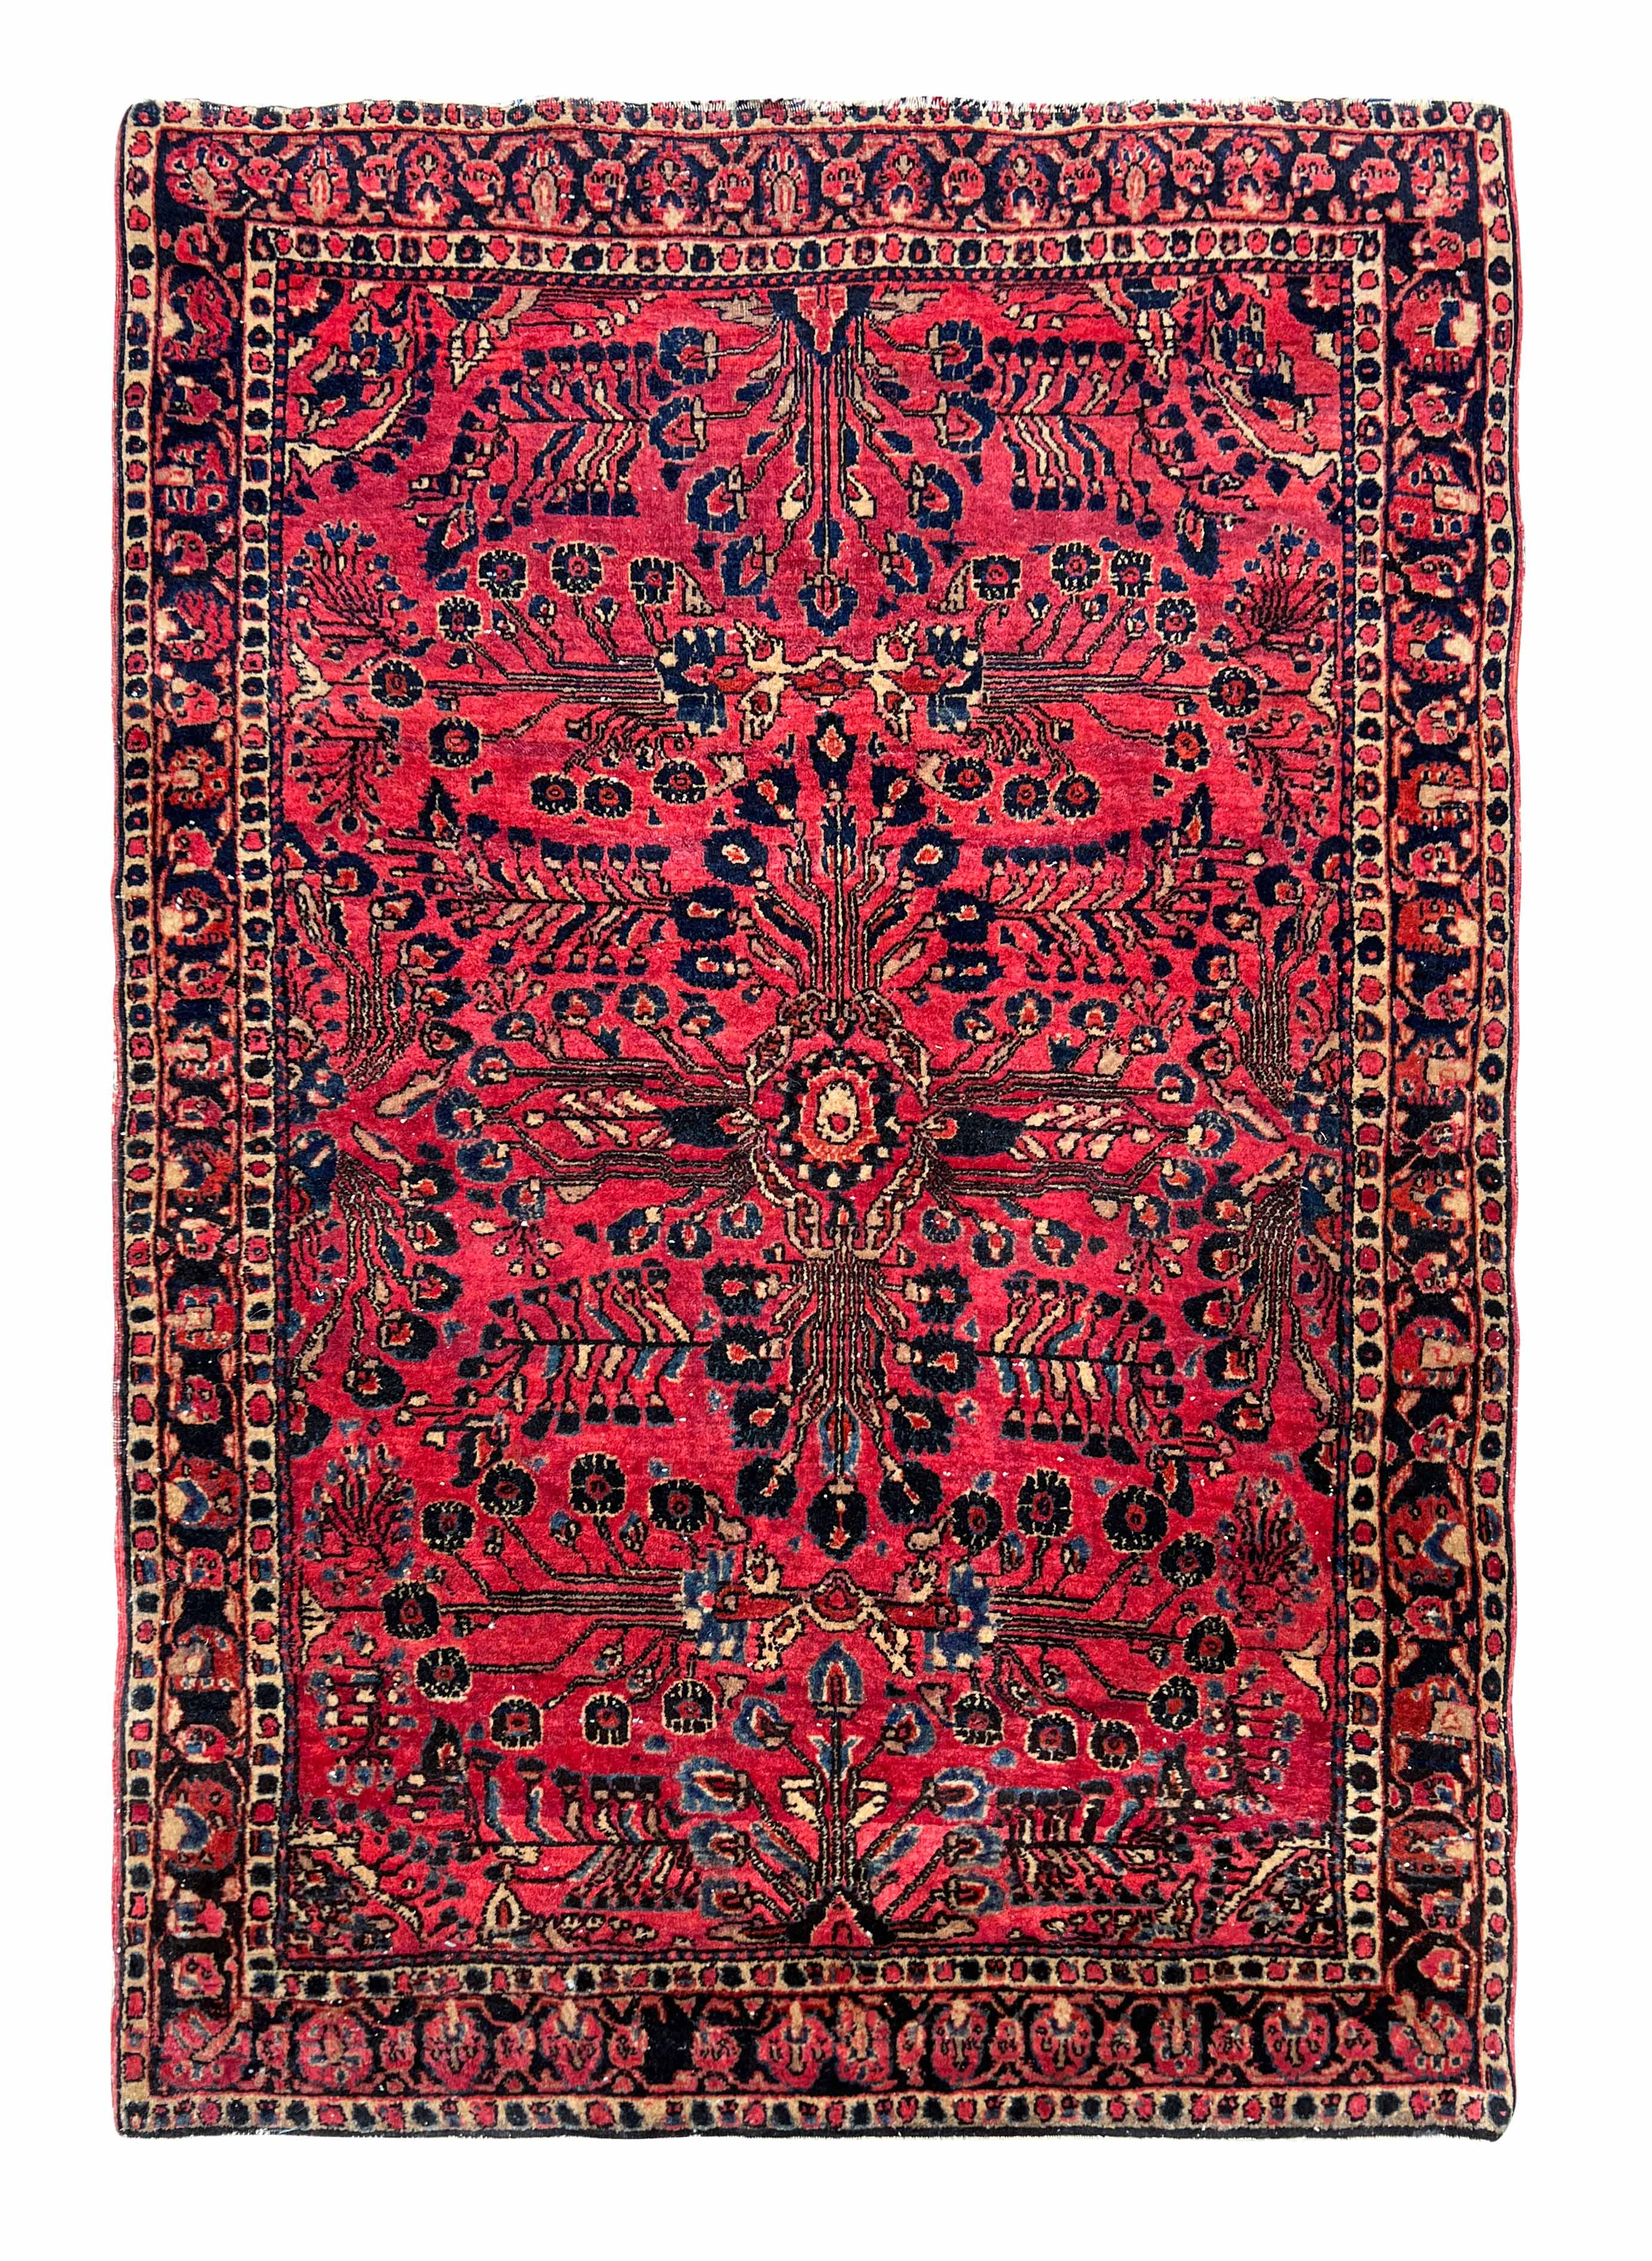 Small-format US Saruk. Oriental carpet.